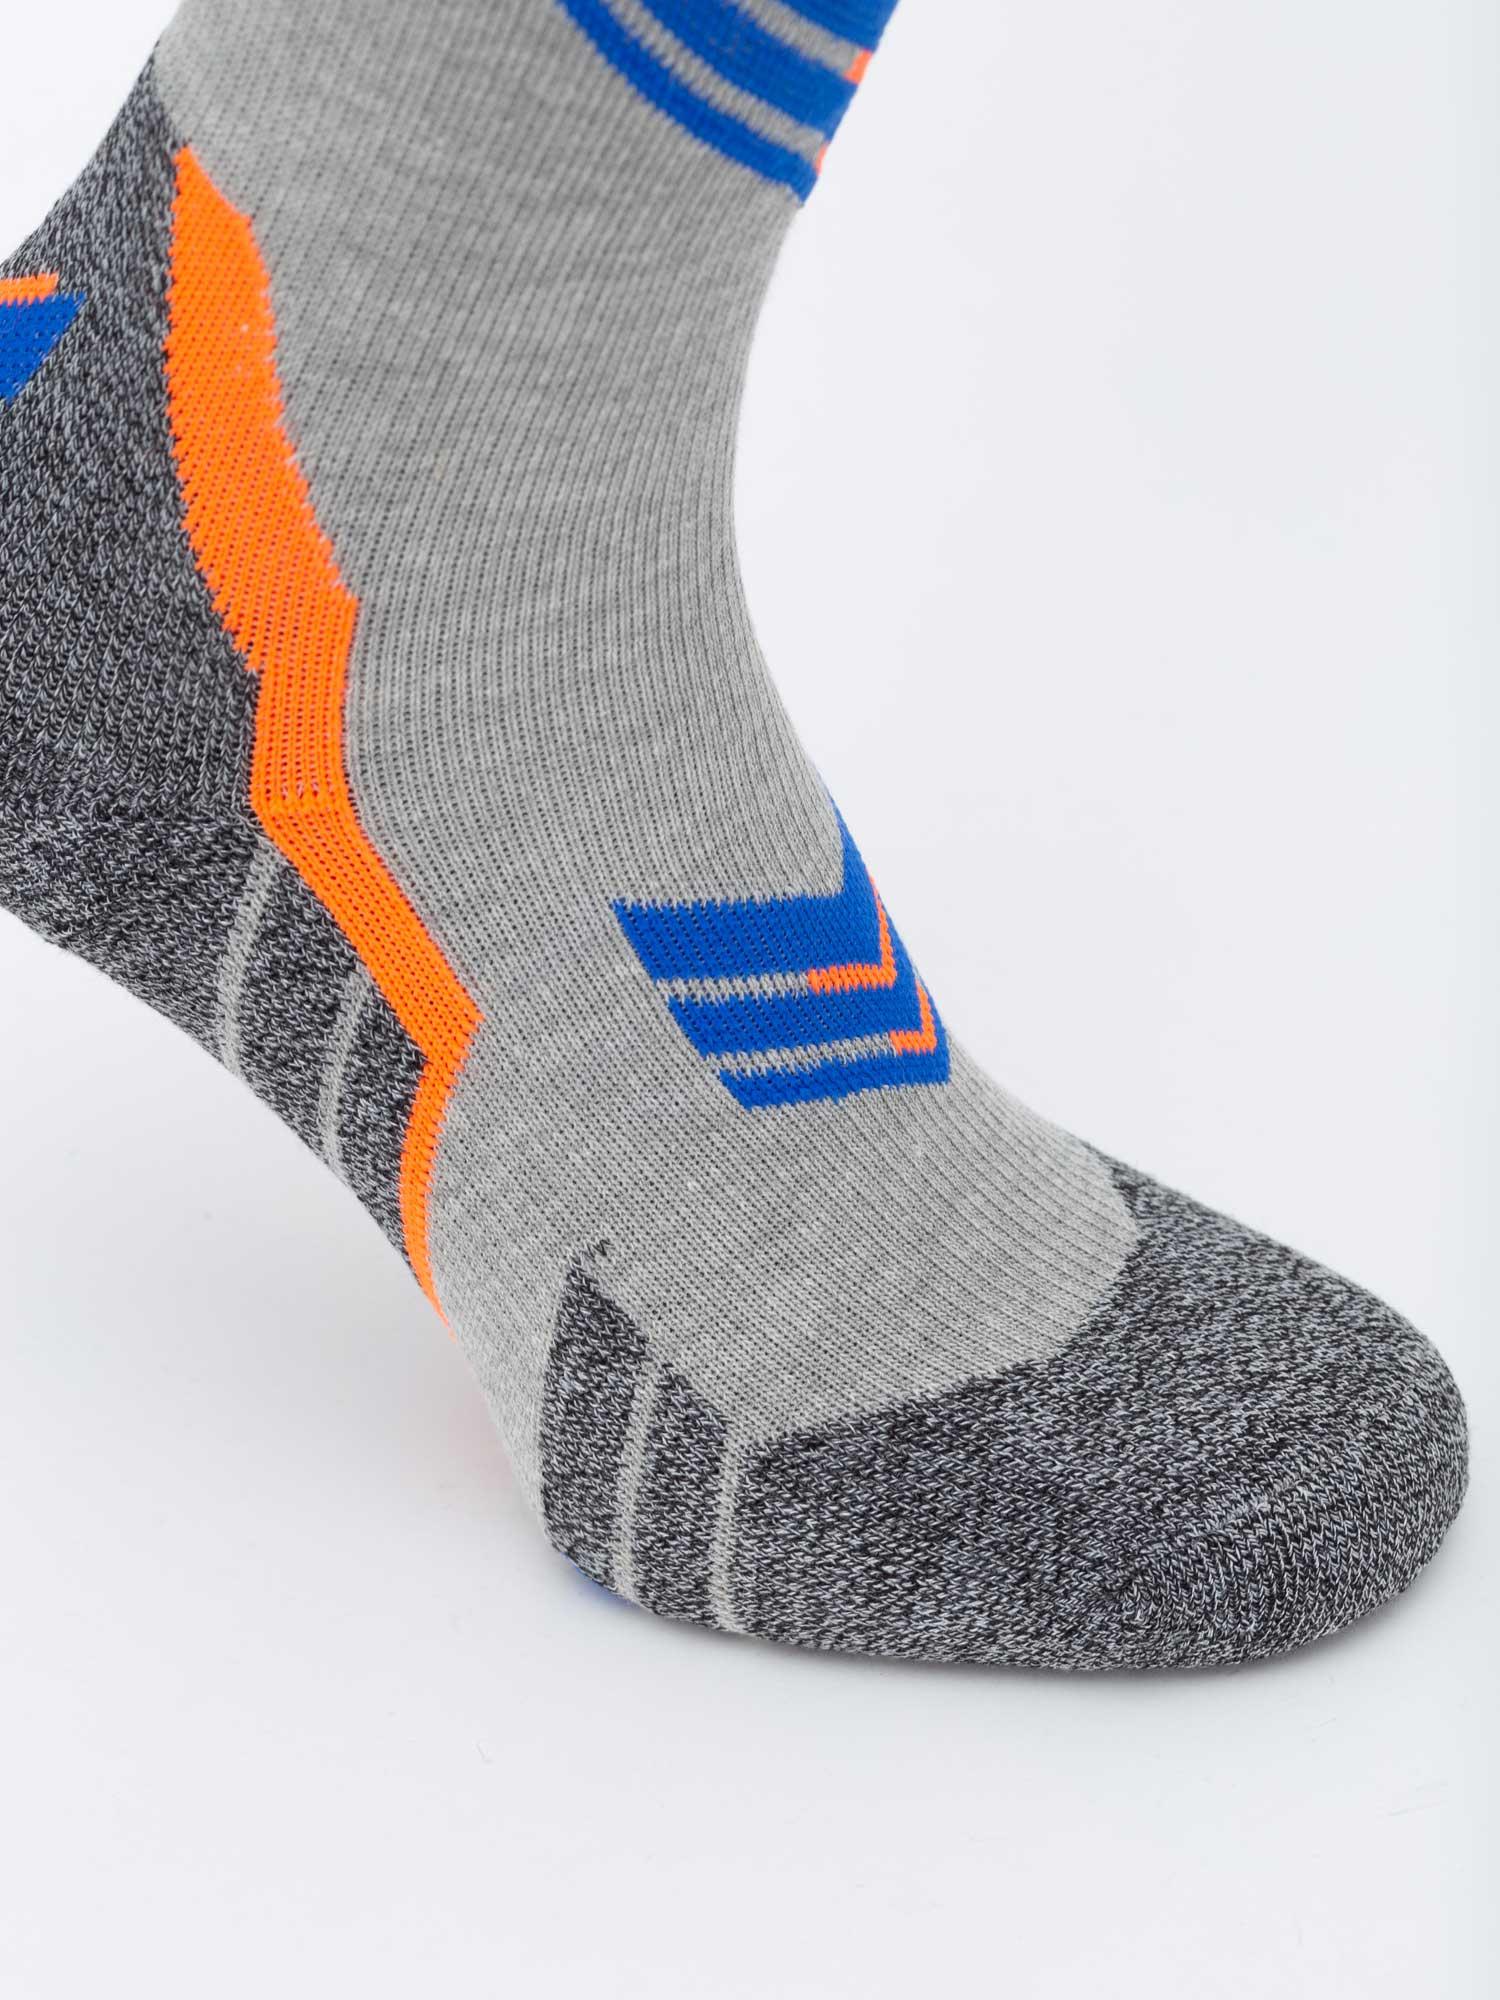 Selected image for BRILLE Dečije čarape Laax 2 Pack Ski SD231112 sivo-plave